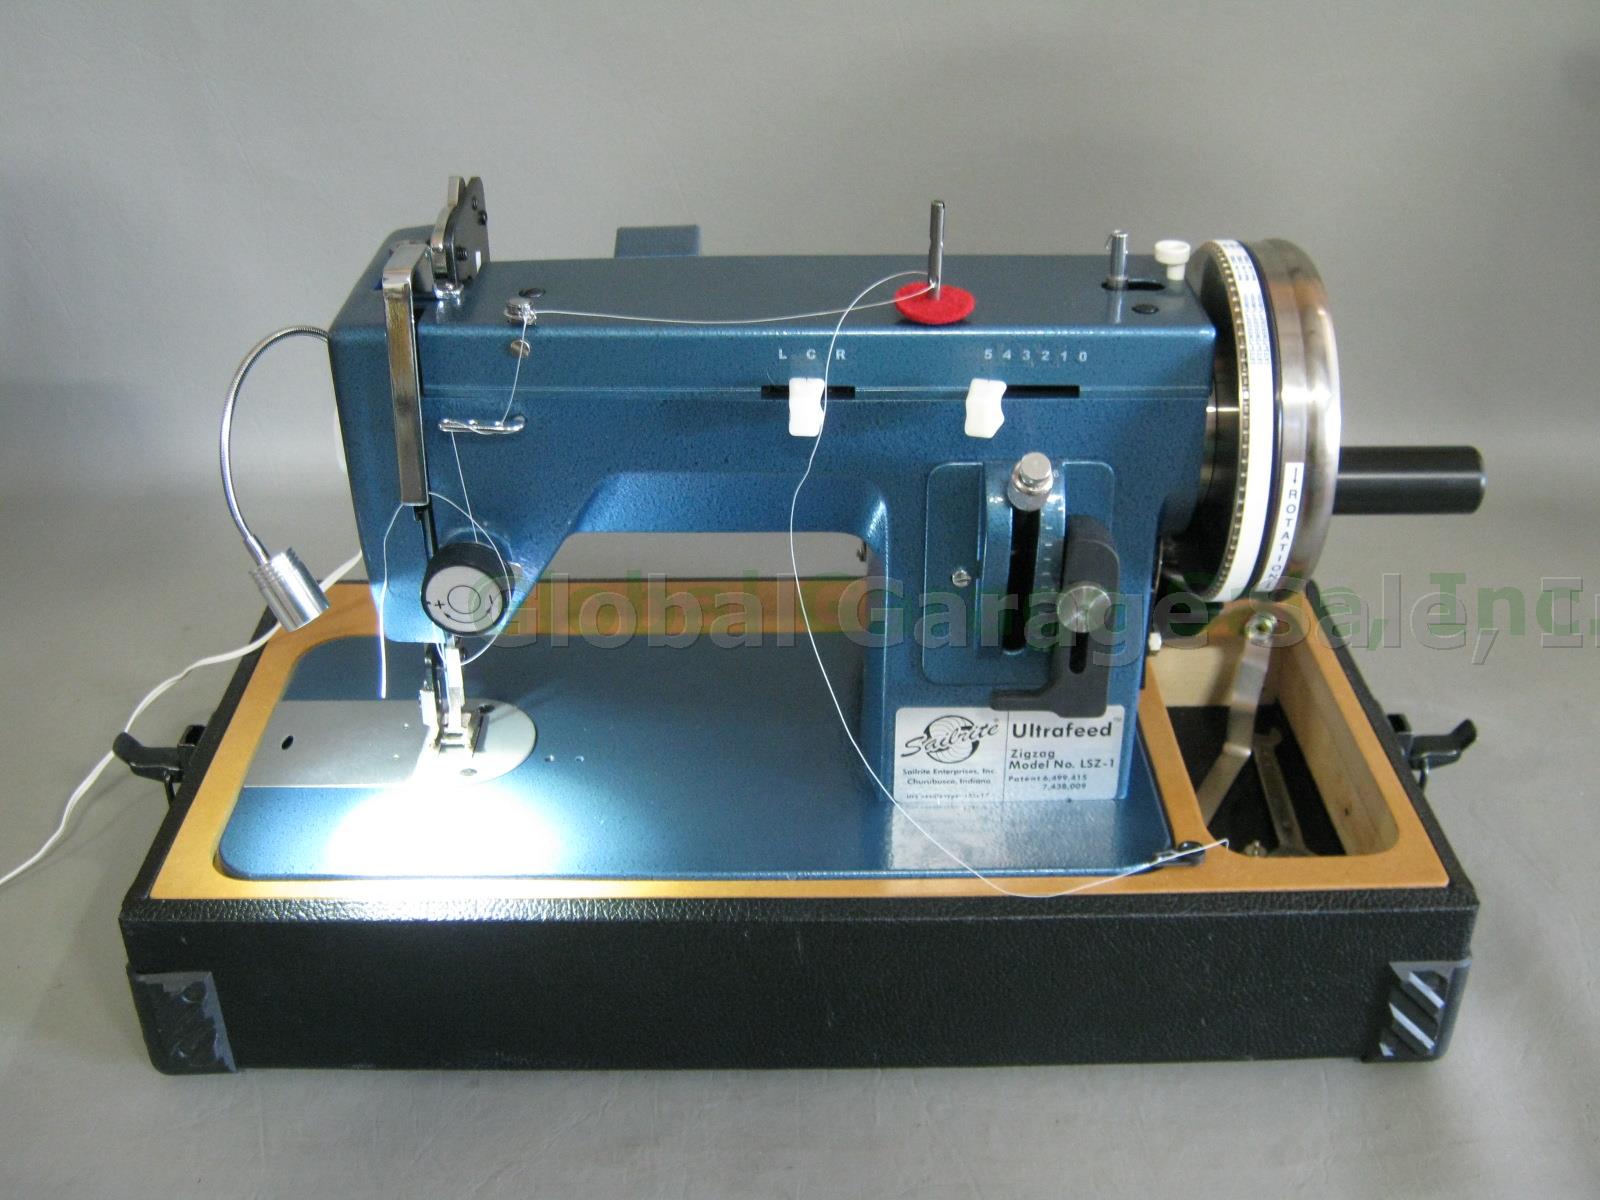 Sailrite Ultrafeed Zigzag LSZ-1 Walking Foot Sewing Machine W/ Case Pedal Lot NR 1